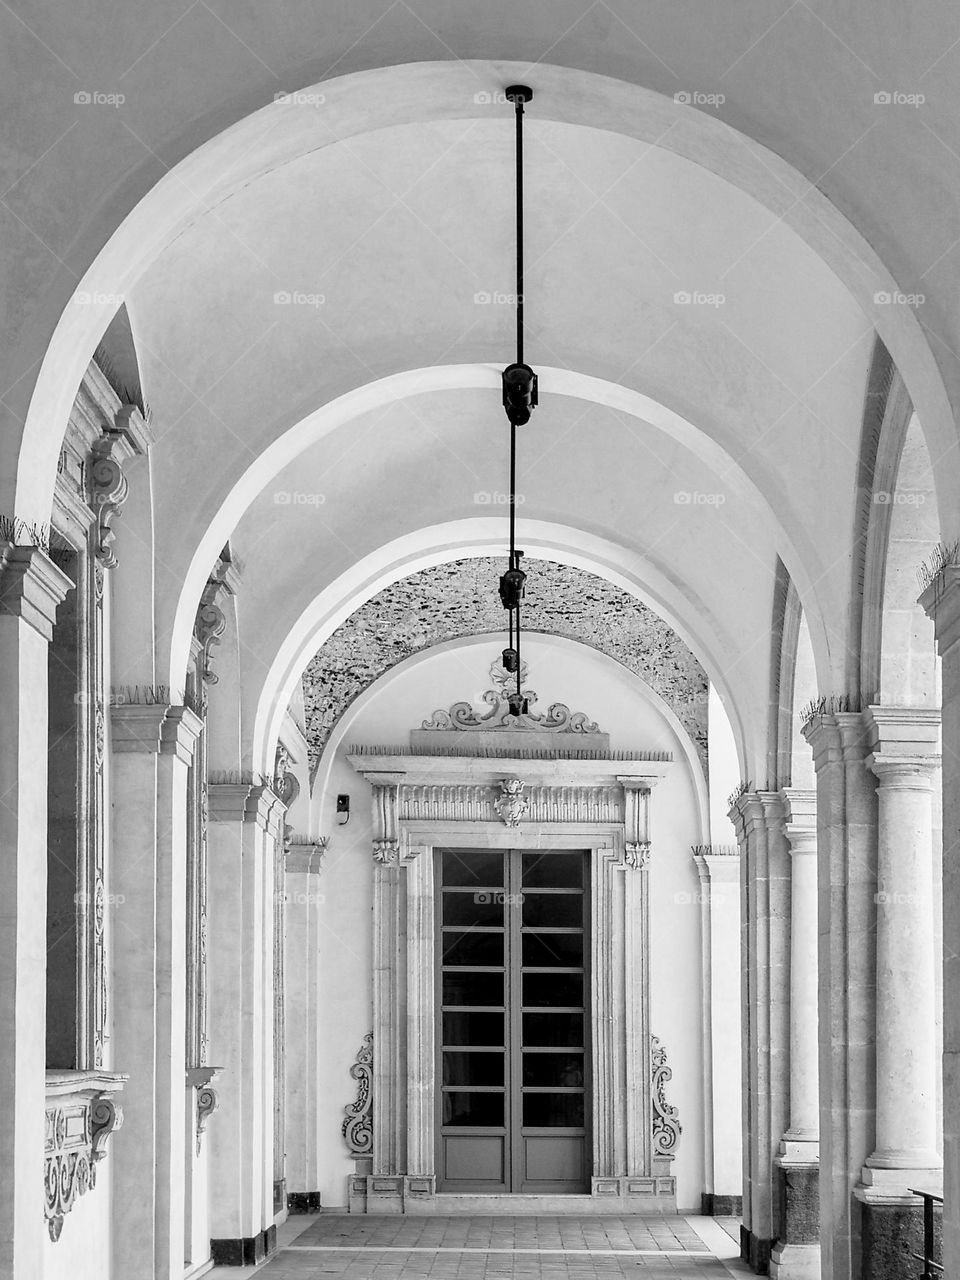 Corridor, round arches, columns